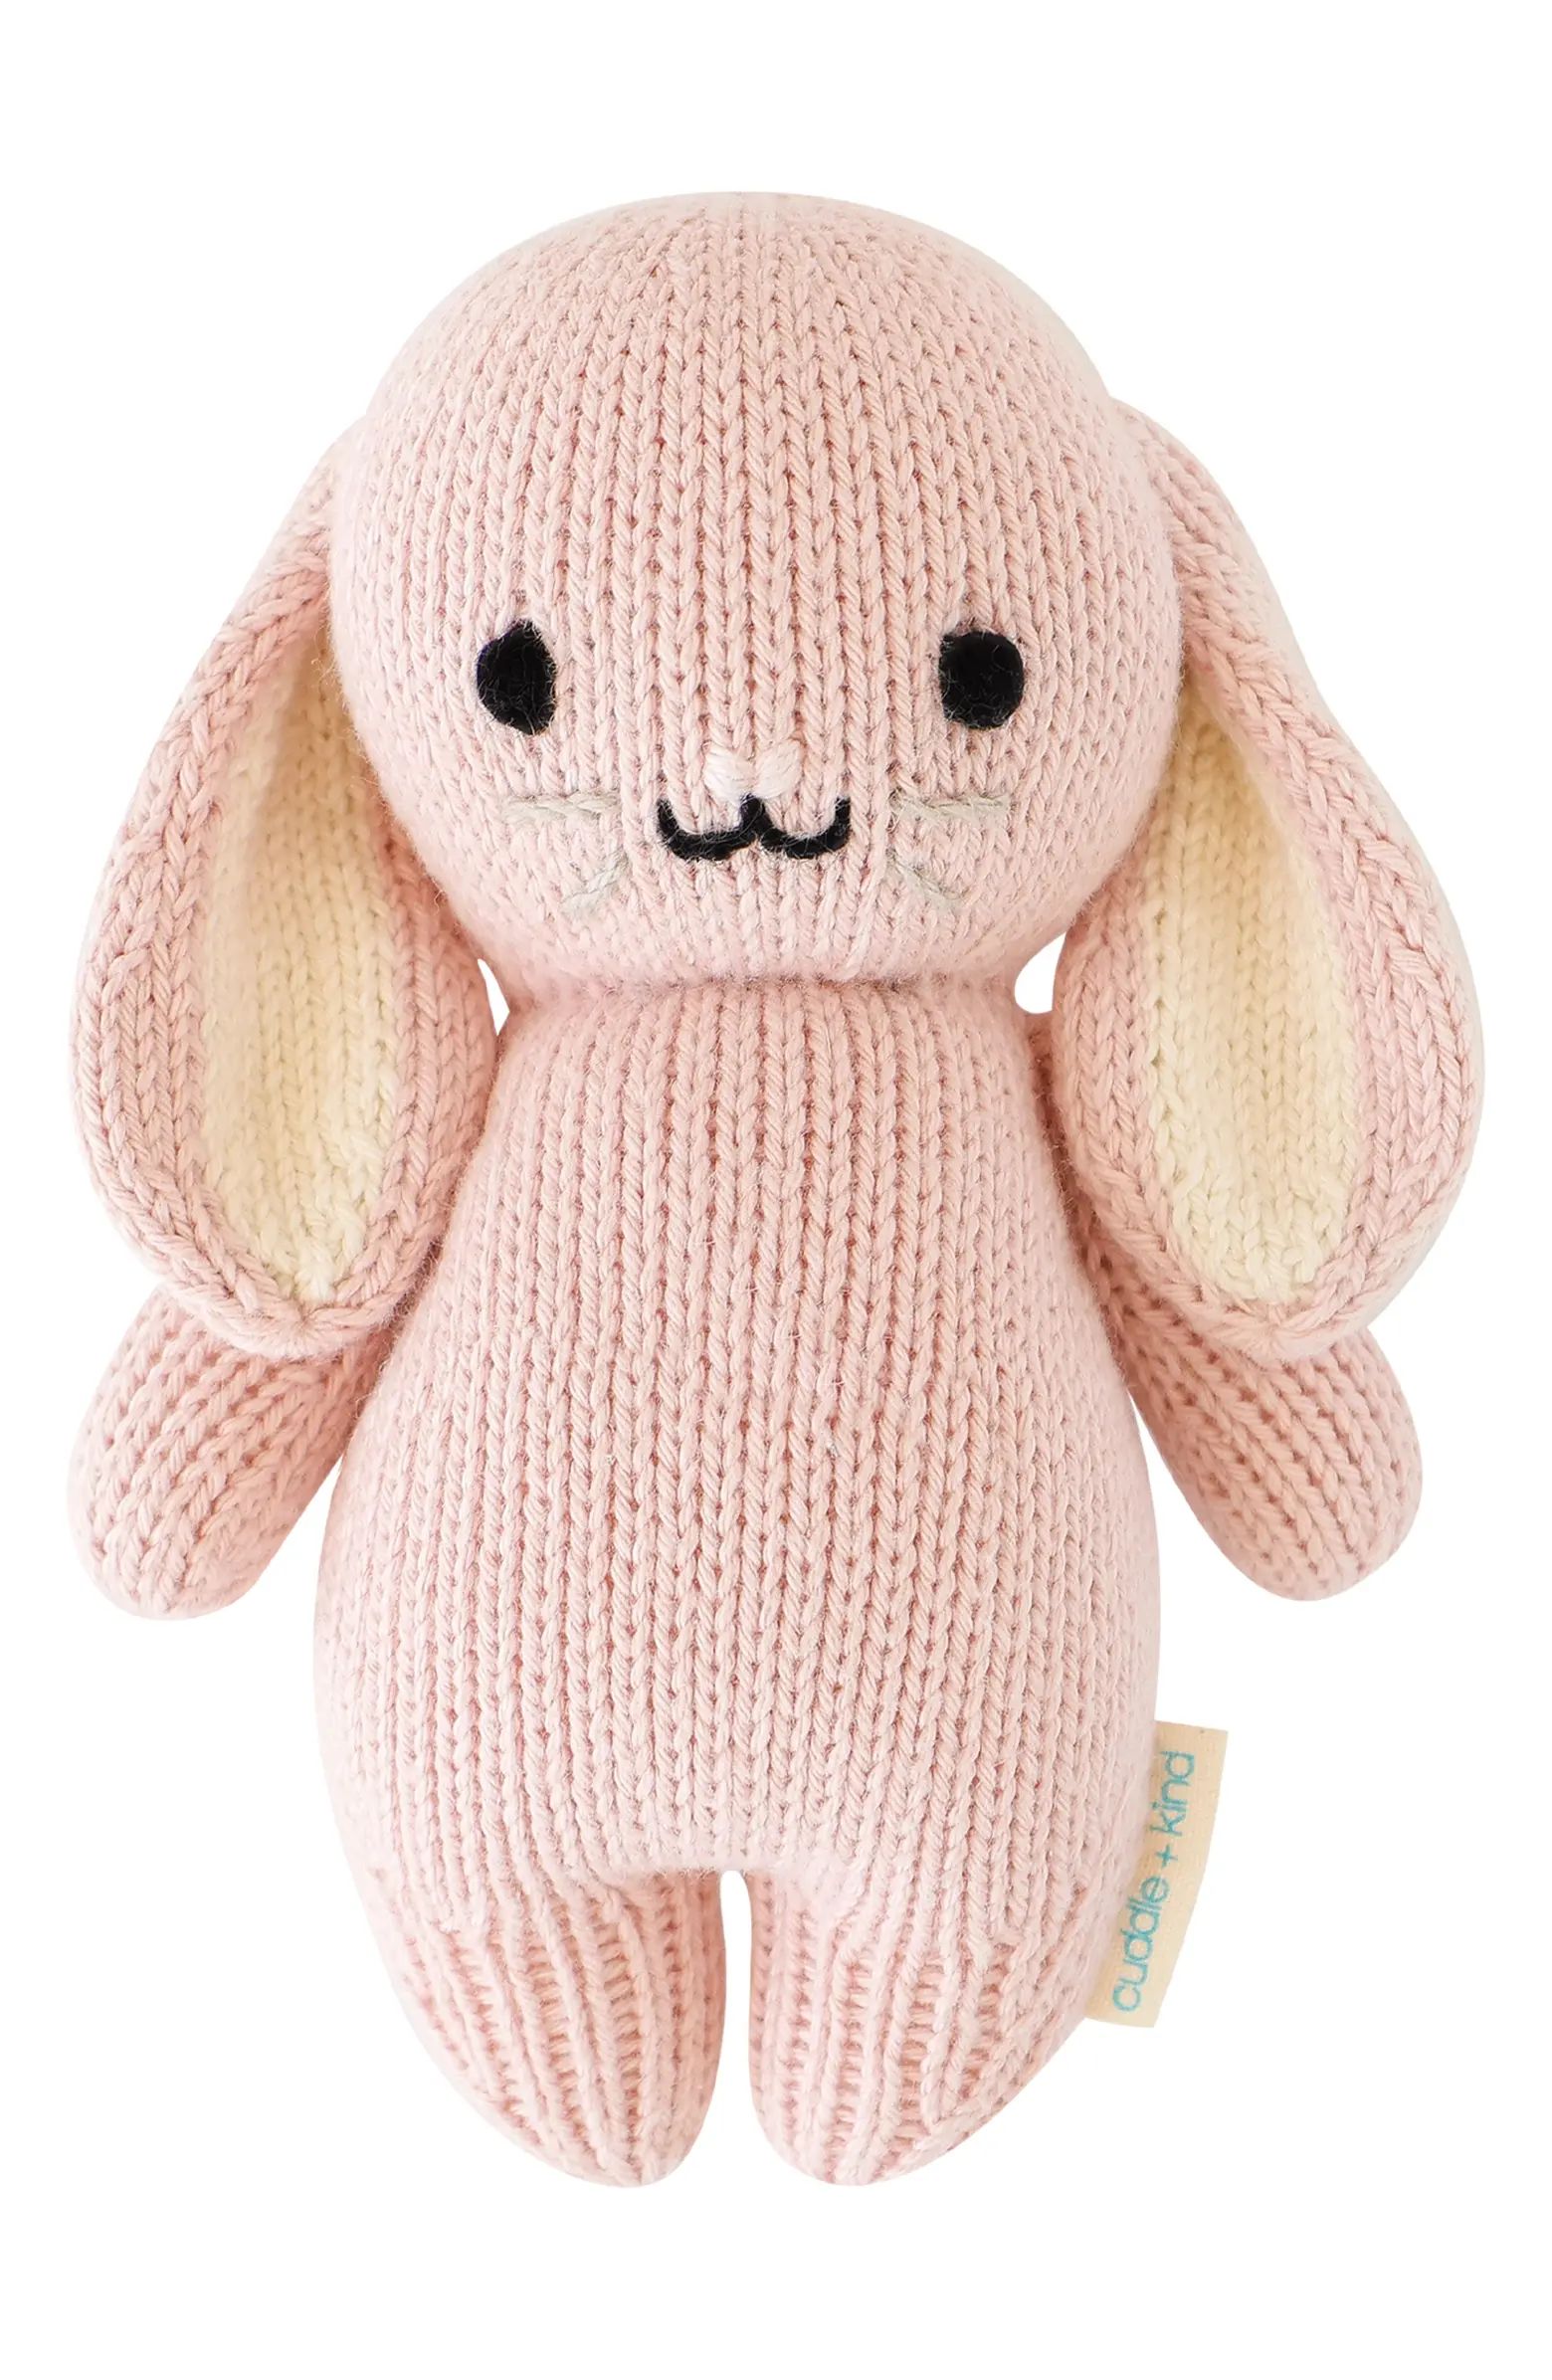 Baby Bunny Stuffed Animal | Nordstrom